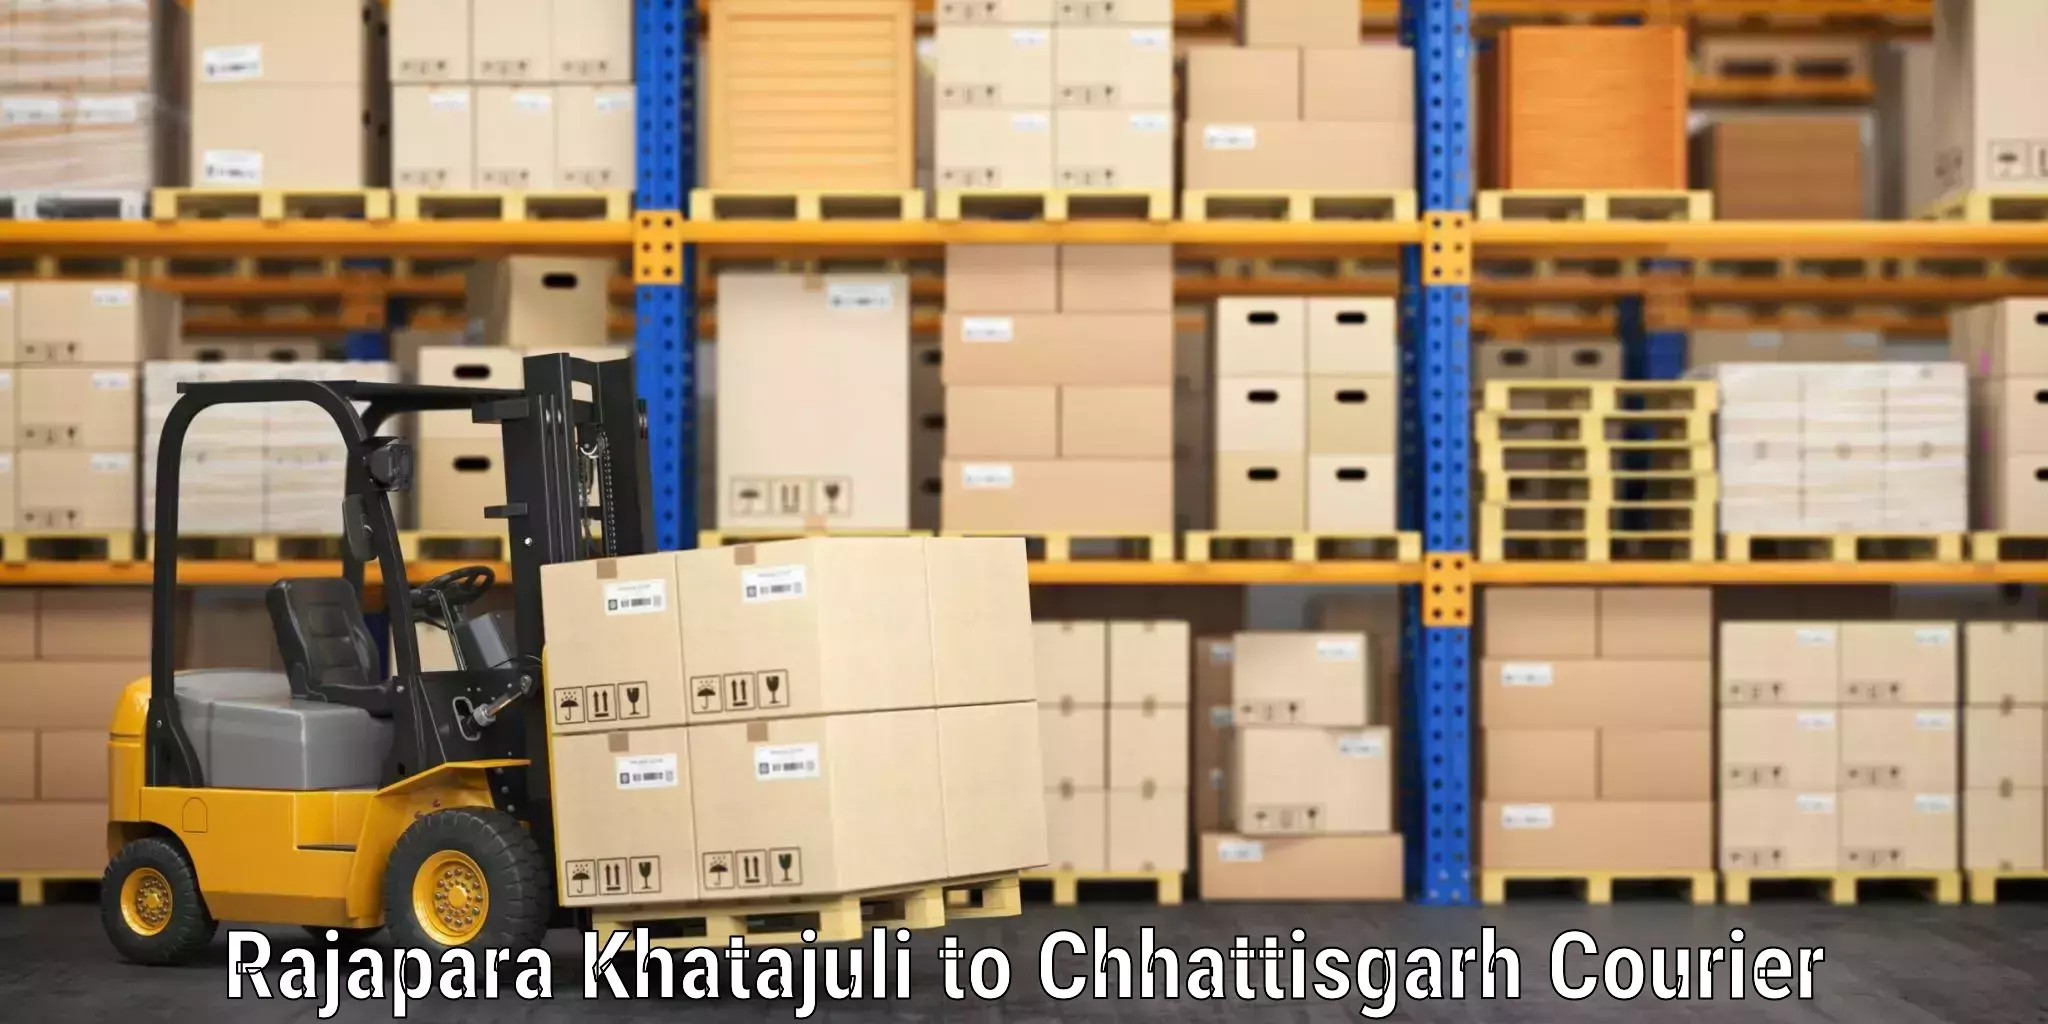 Luggage shipping consultation Rajapara Khatajuli to Dhamtari